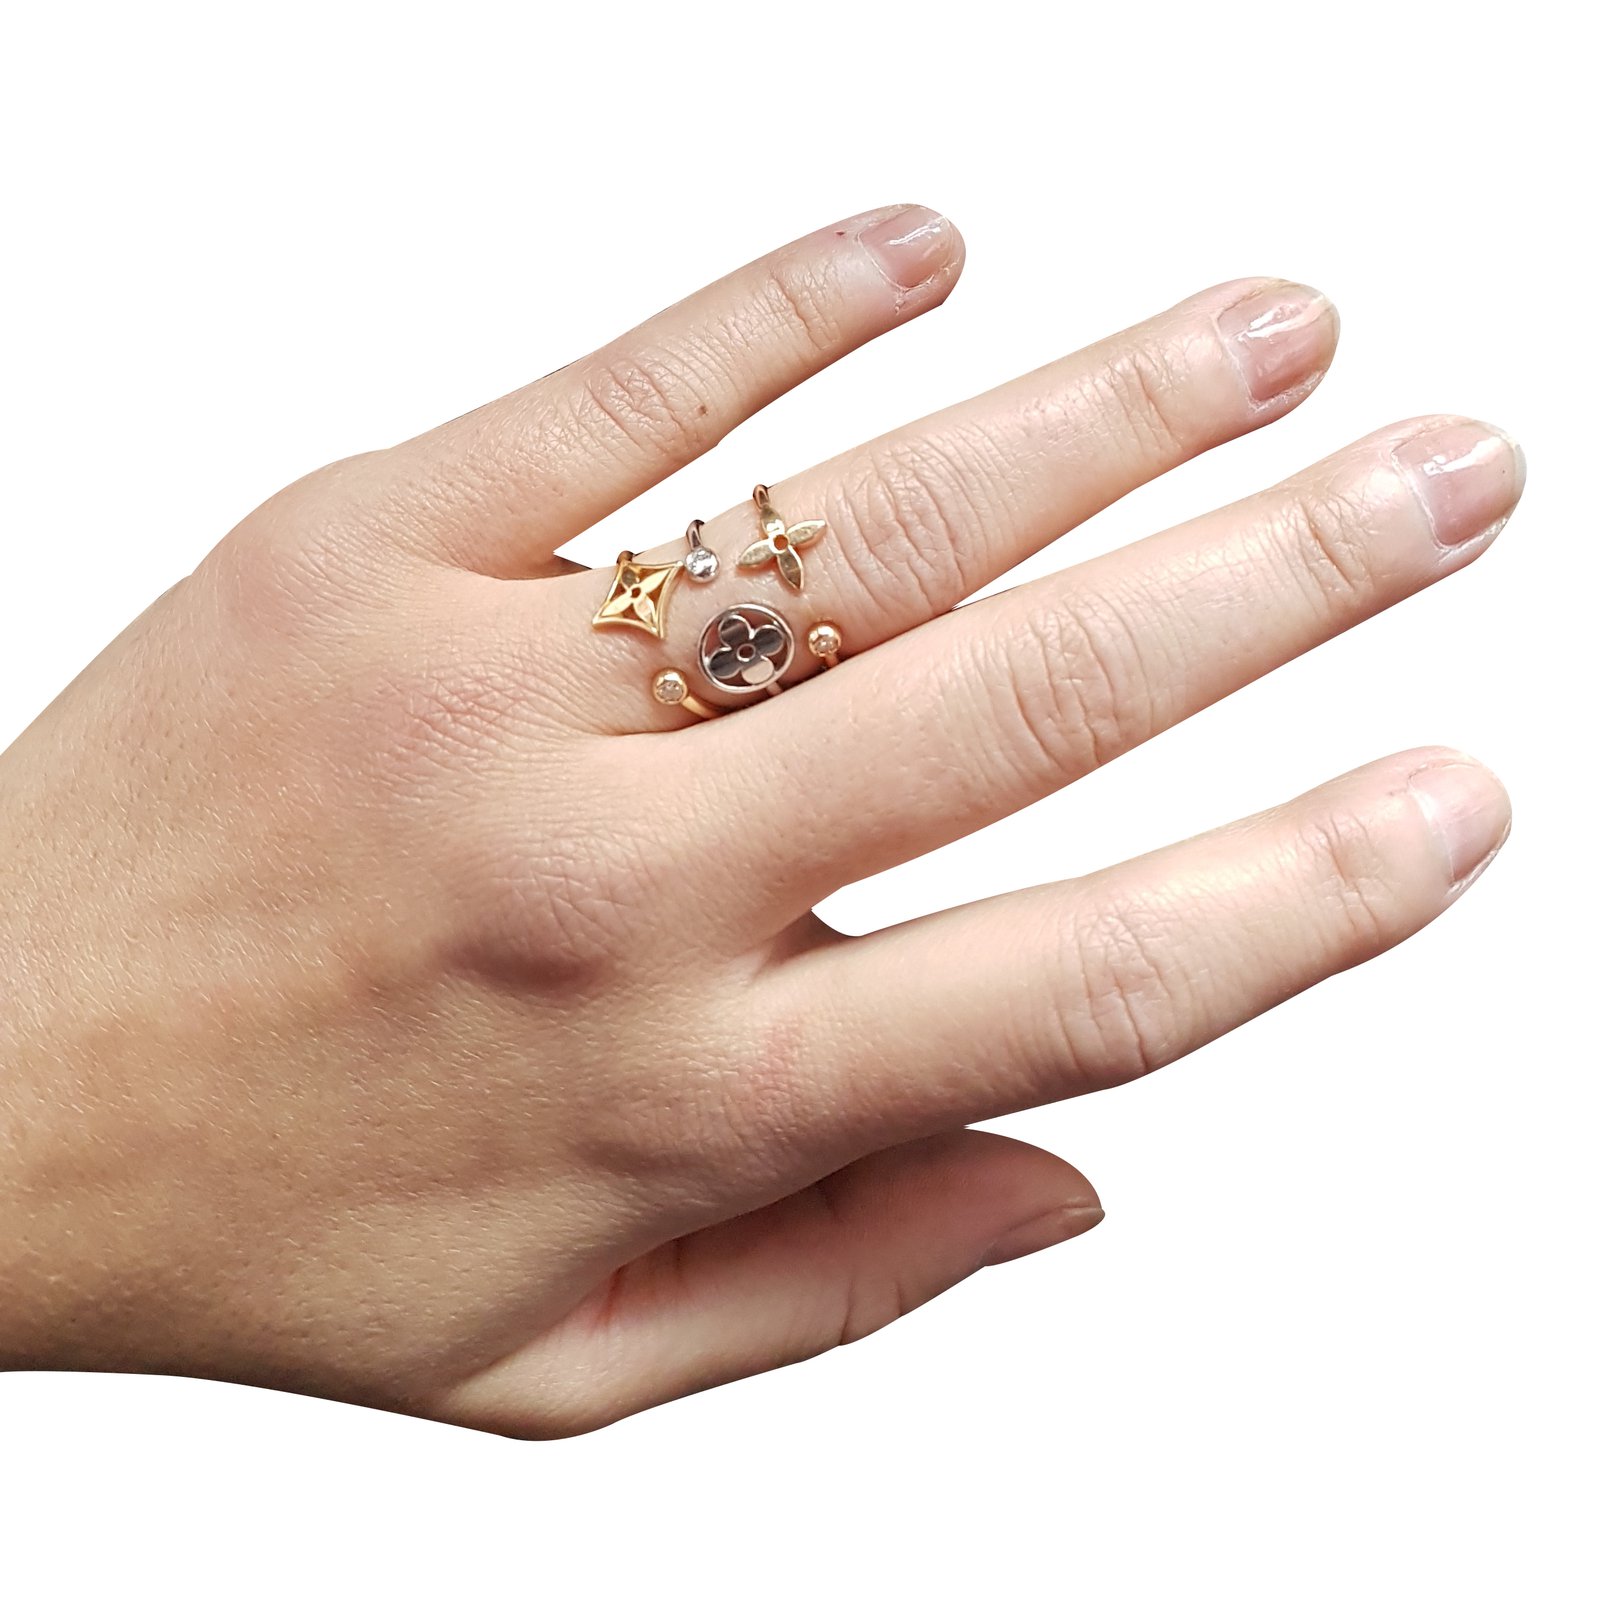 Louis Vuitton Idylle Blossom 18k 3 Golds & Diamonds Ring